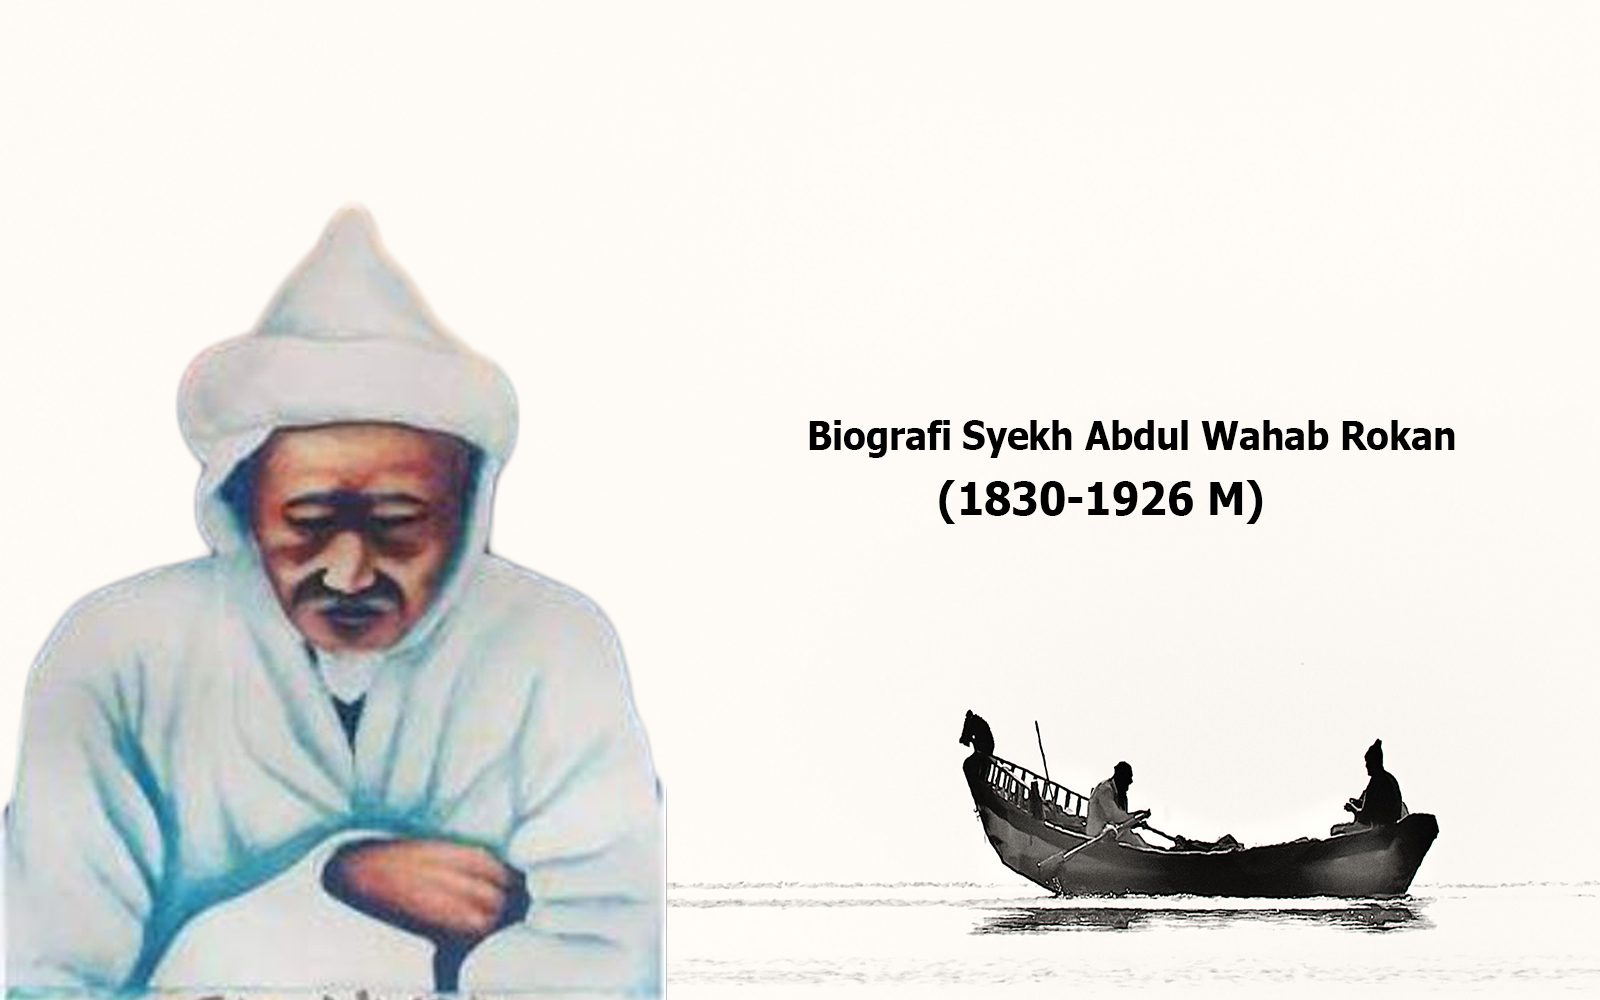 Biografi Syekh Abdul Wahab Rokan (1830-1926 M) Beserta Karomah yang Dimilikinya